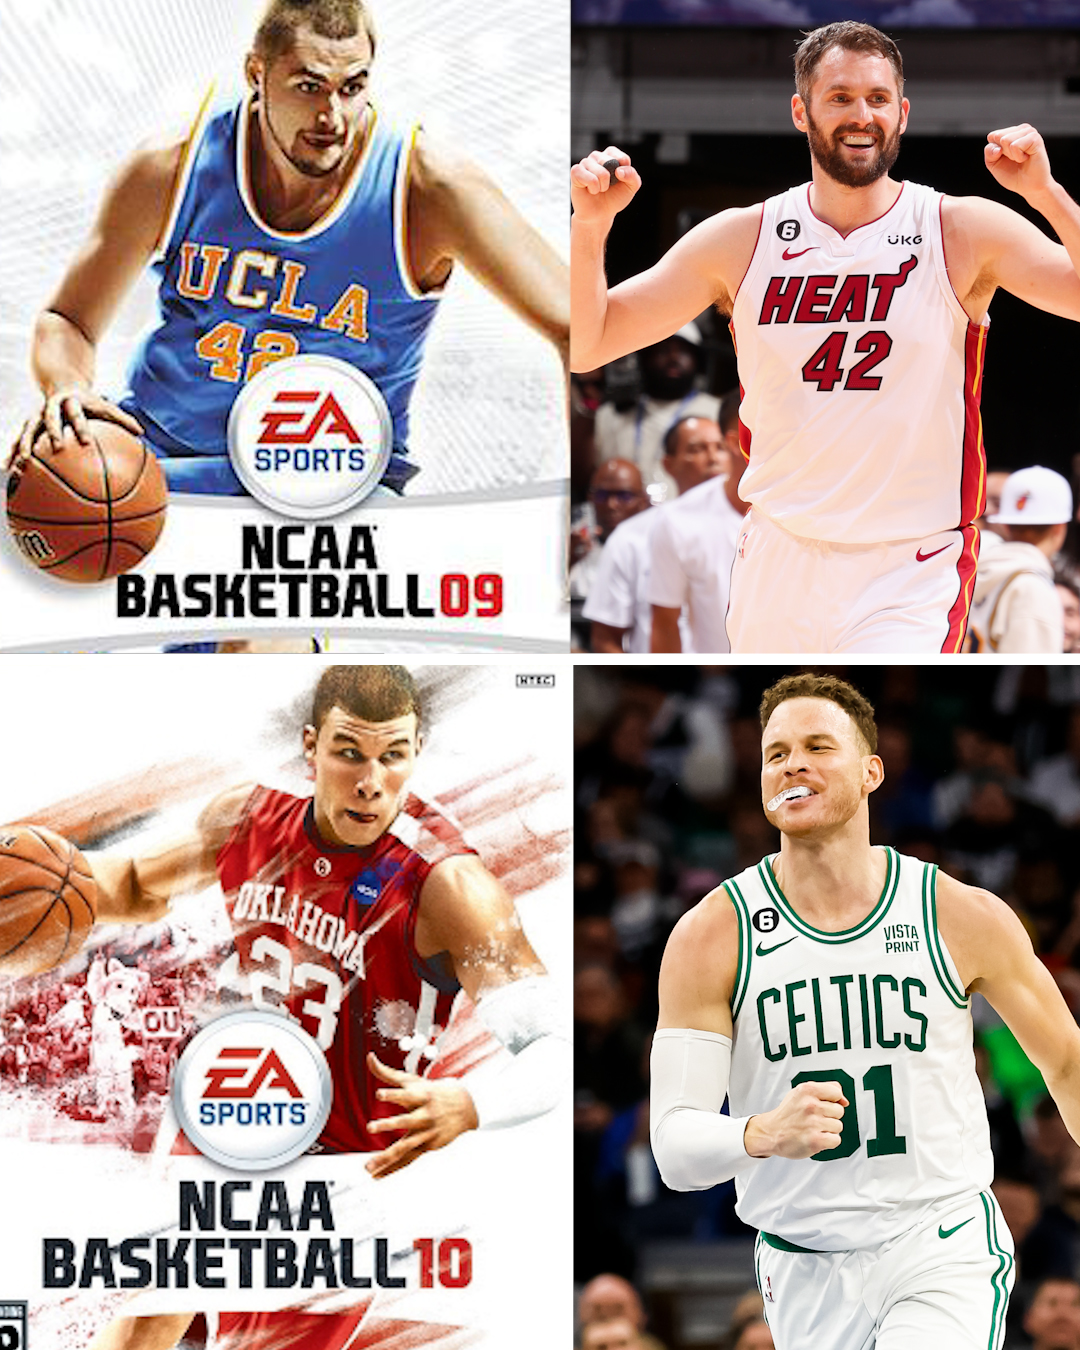 Xbox 360 Basketball Games